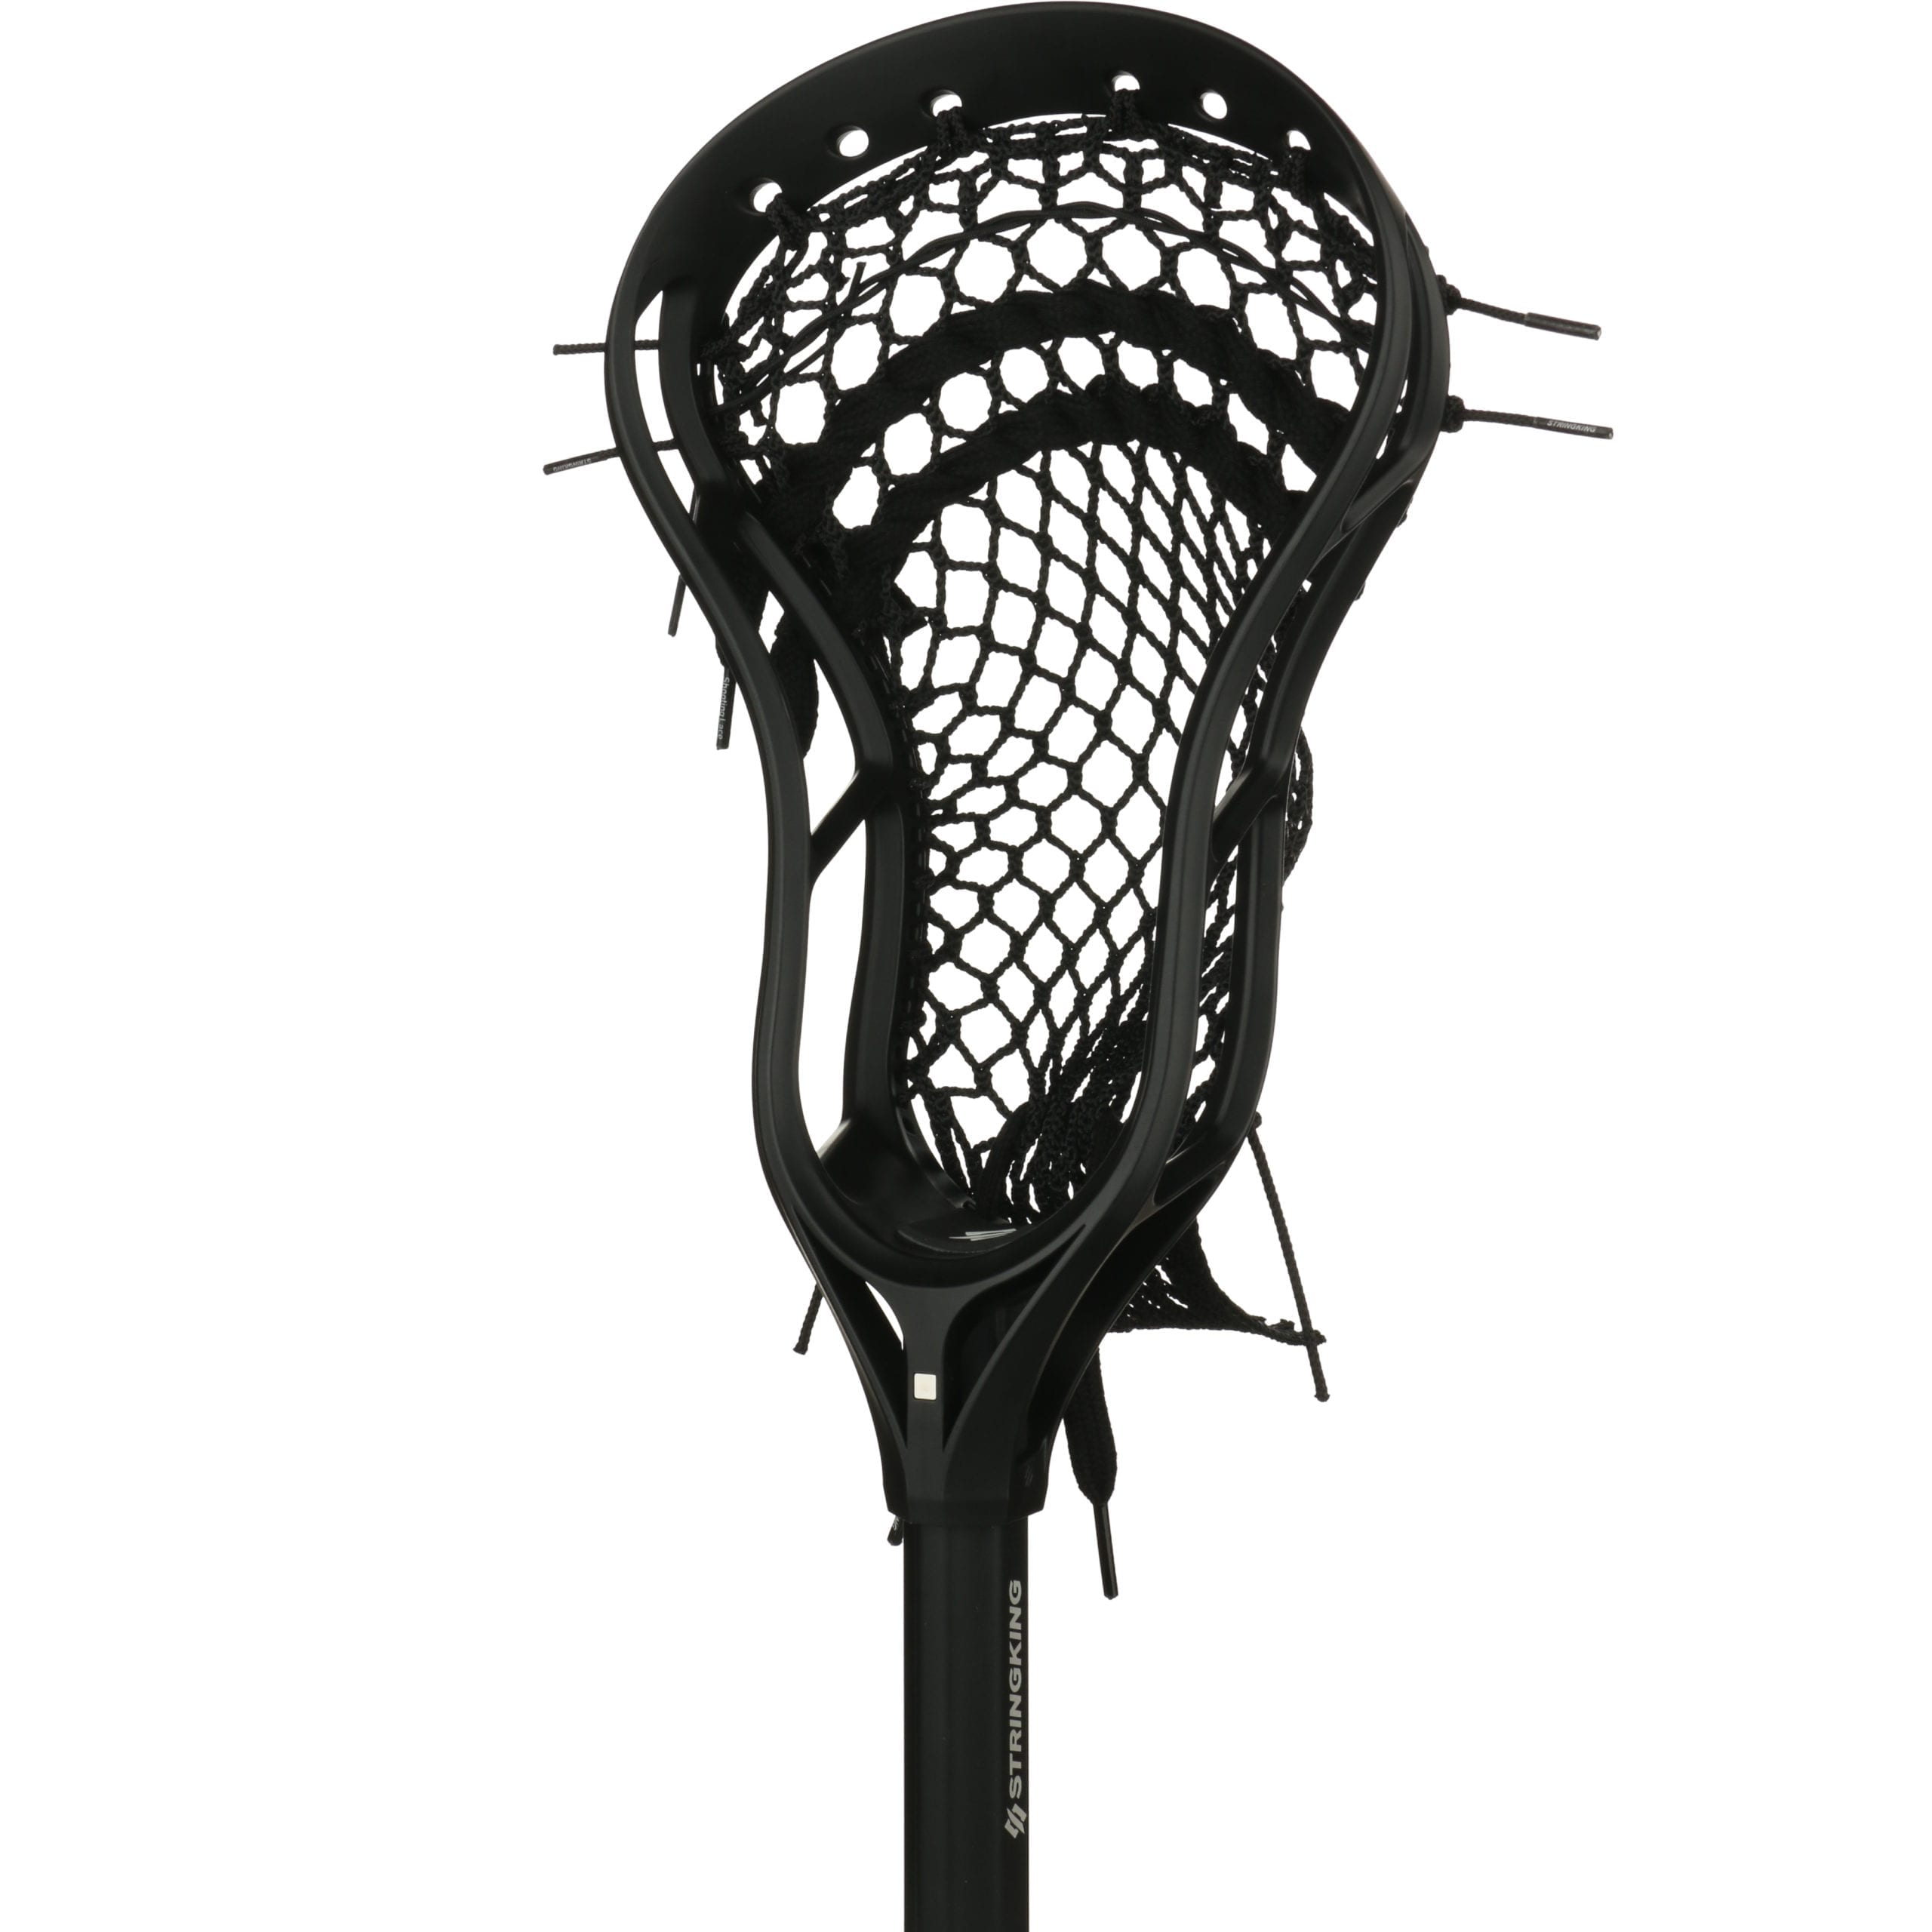 StringKing-Complete-2-INT-Lacrosse-Stick-Black-Black-Angle_4000-scaled-1.jpg